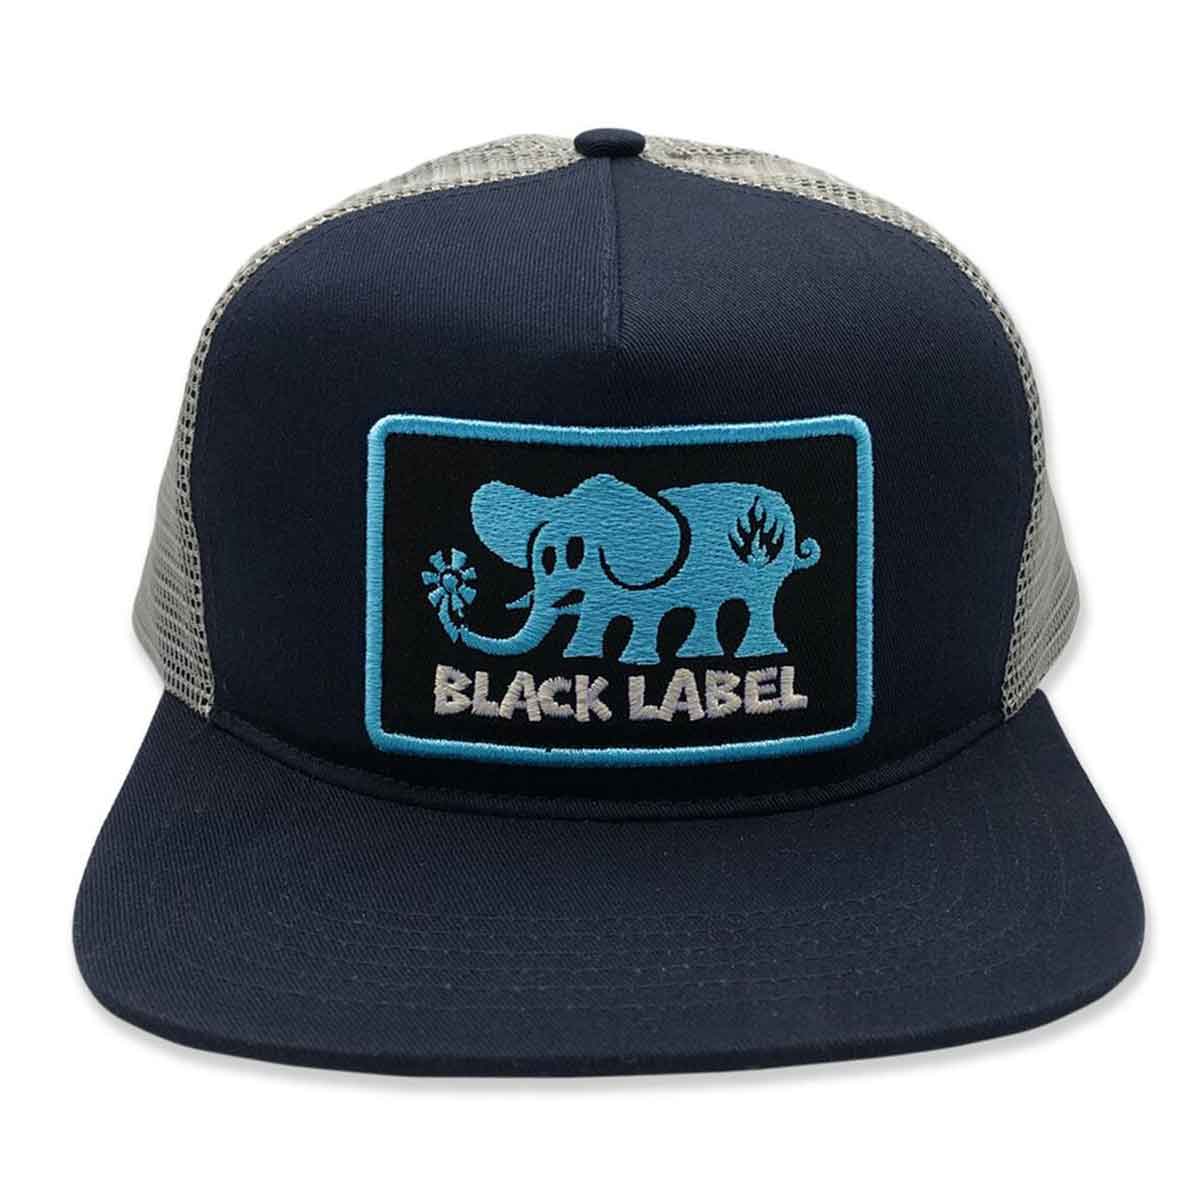 BLACK LABEL - ELEPHANT TRUCKER - NAVY